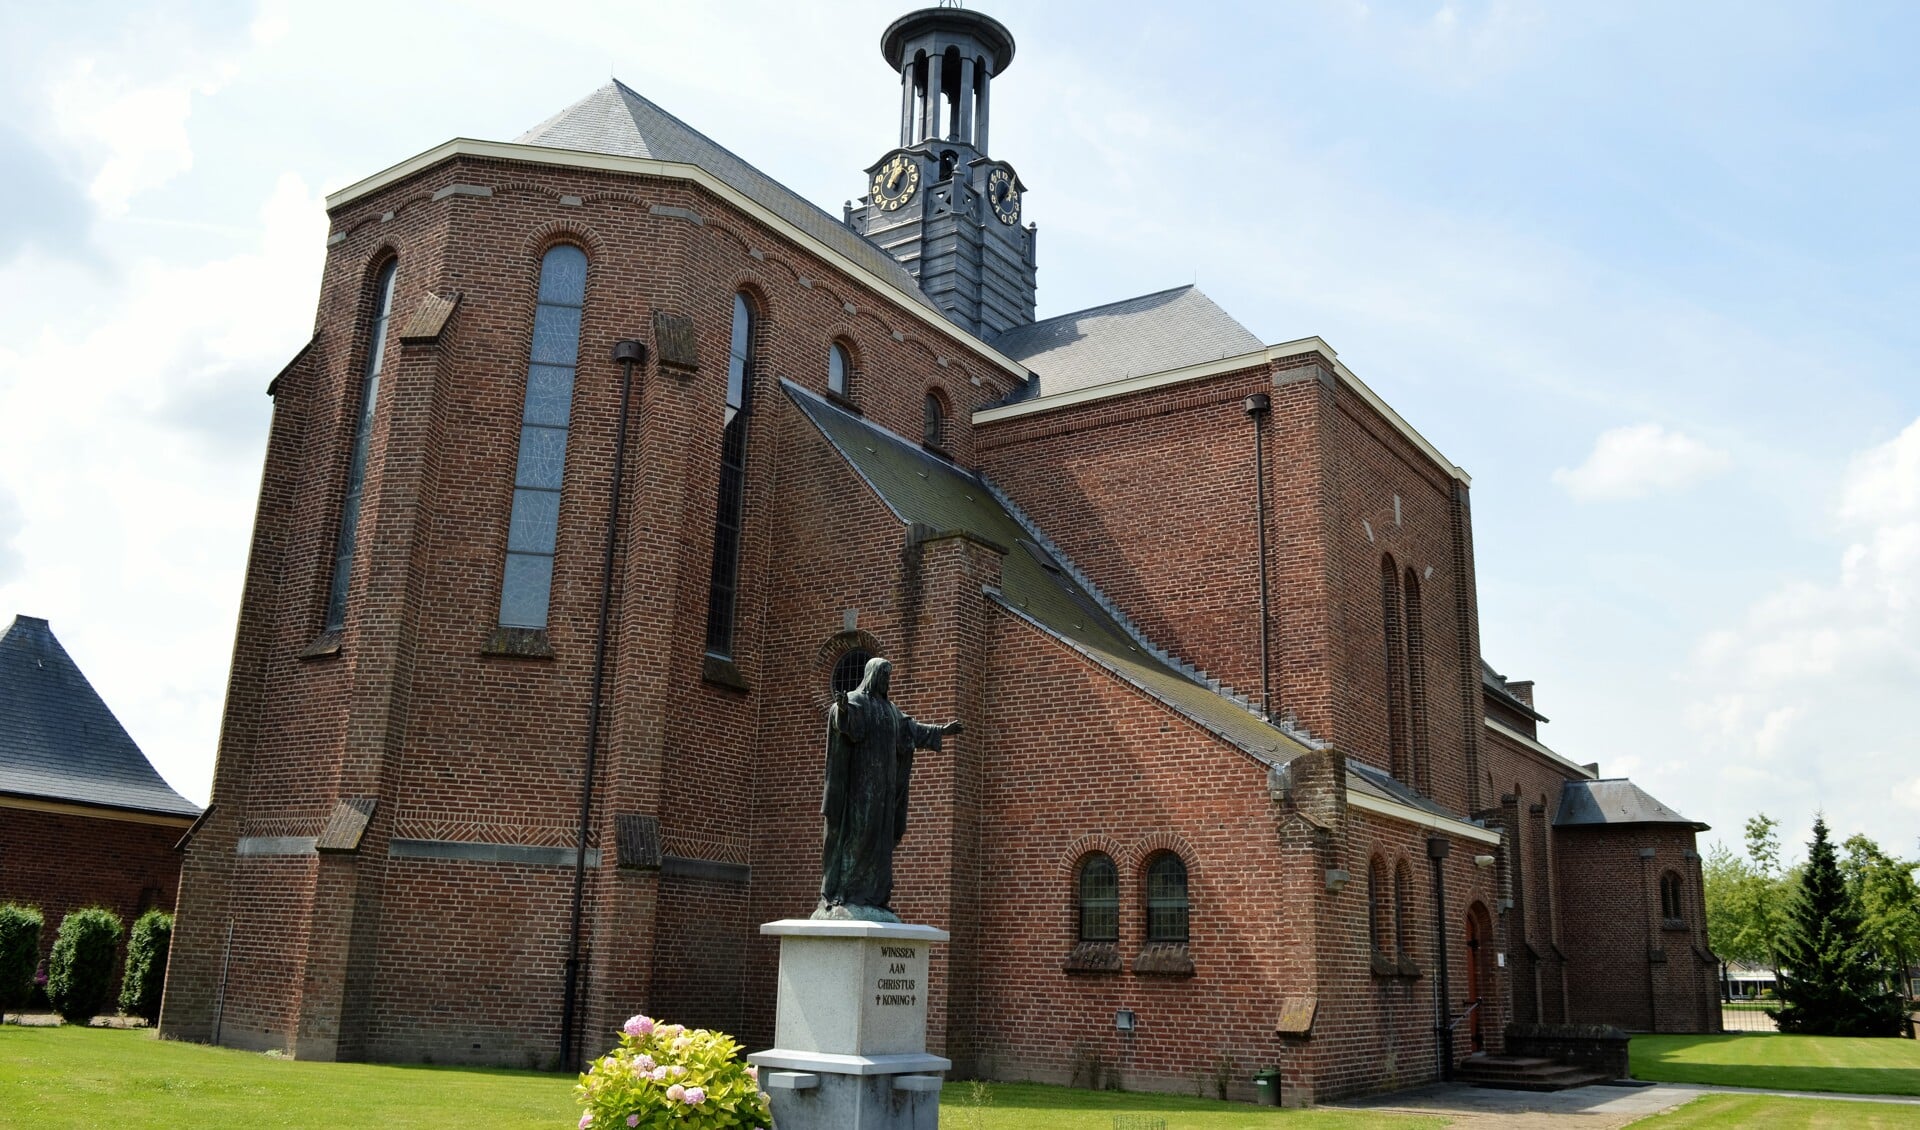 Kerk in Winssen.